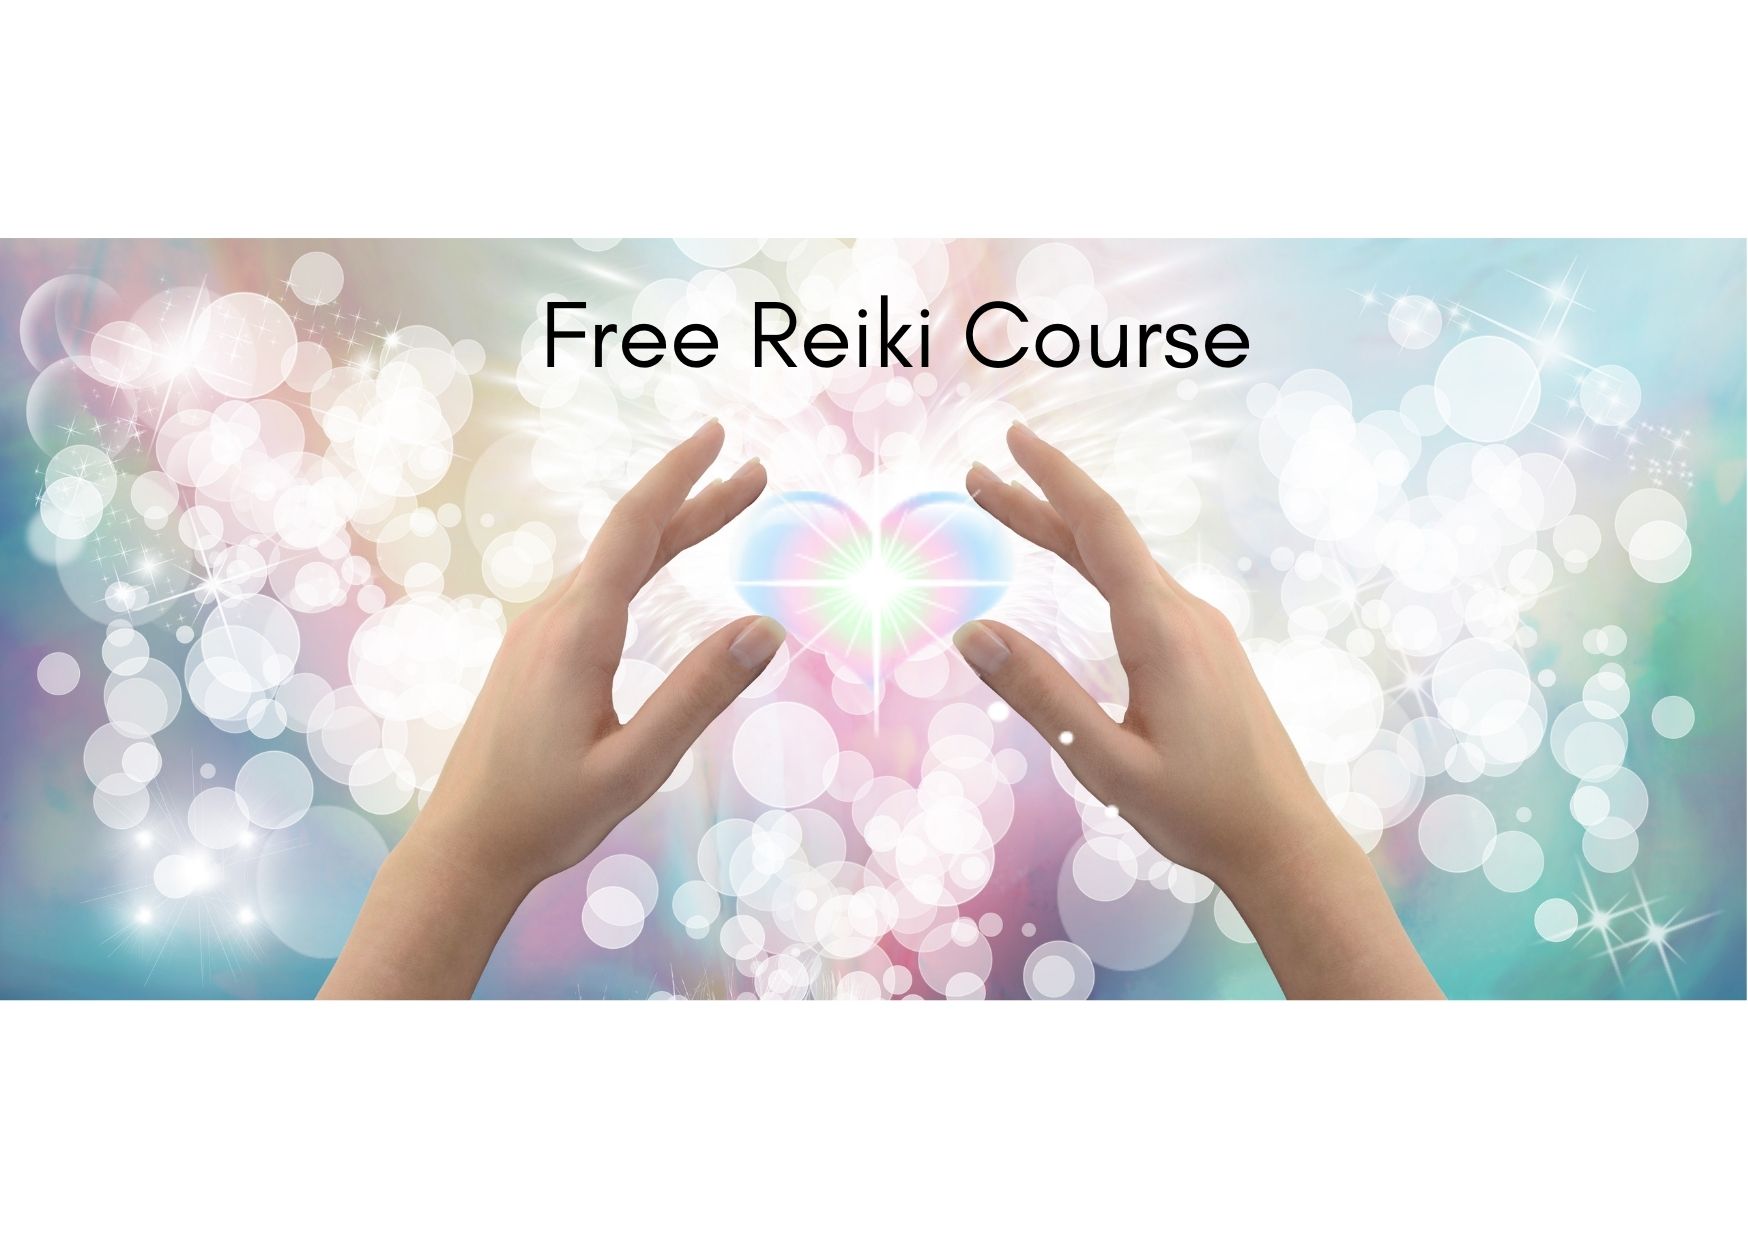 Free Reiki Course - Online Reiki Class